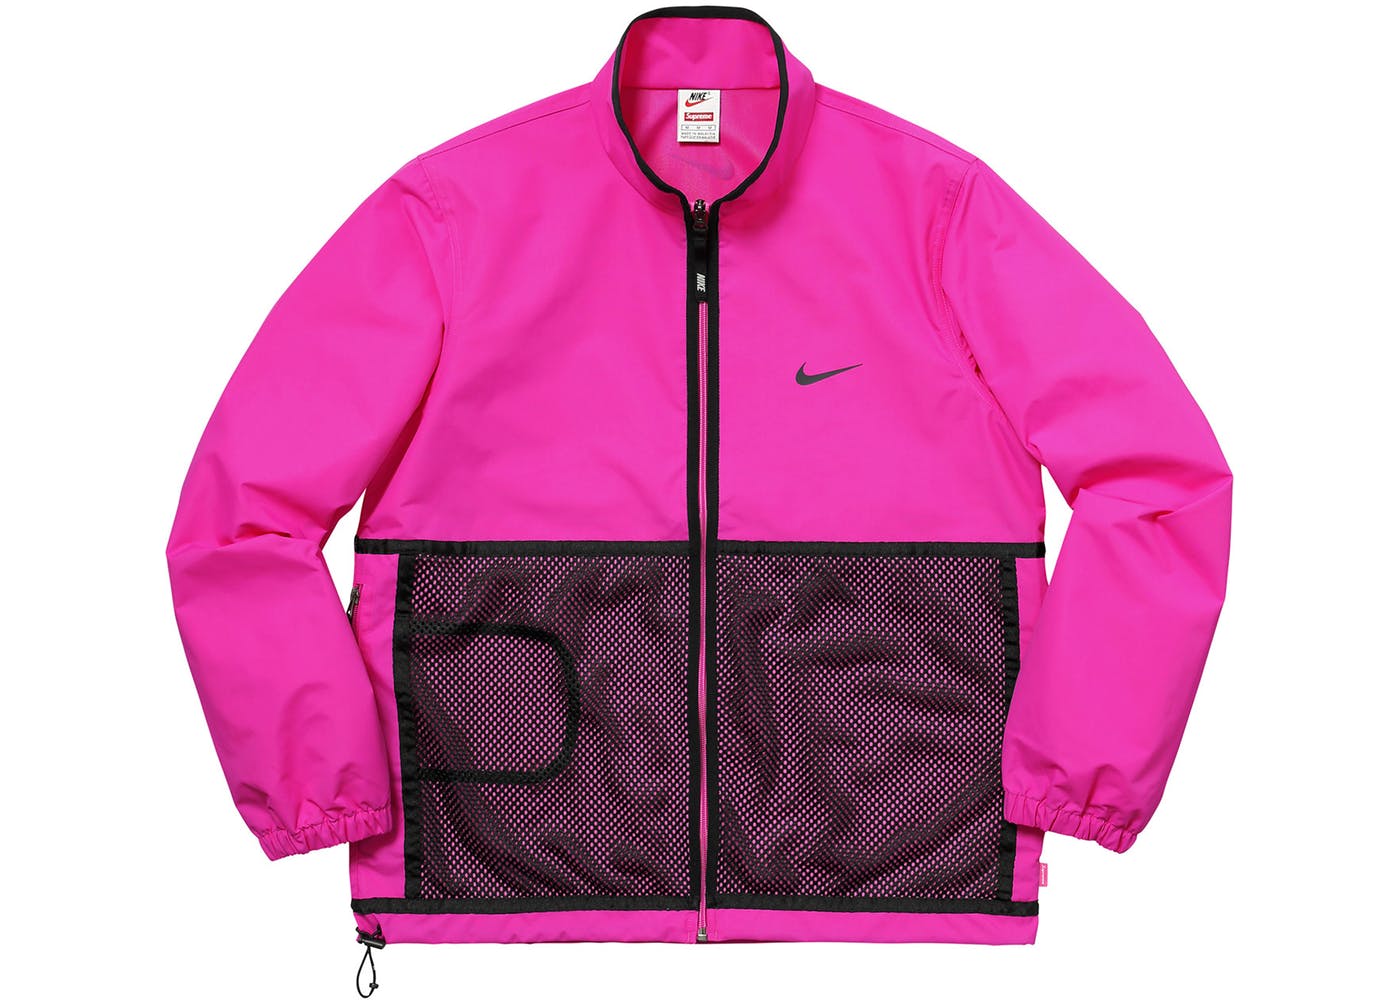 【S】Supreme / Nike Trail Running Jacket